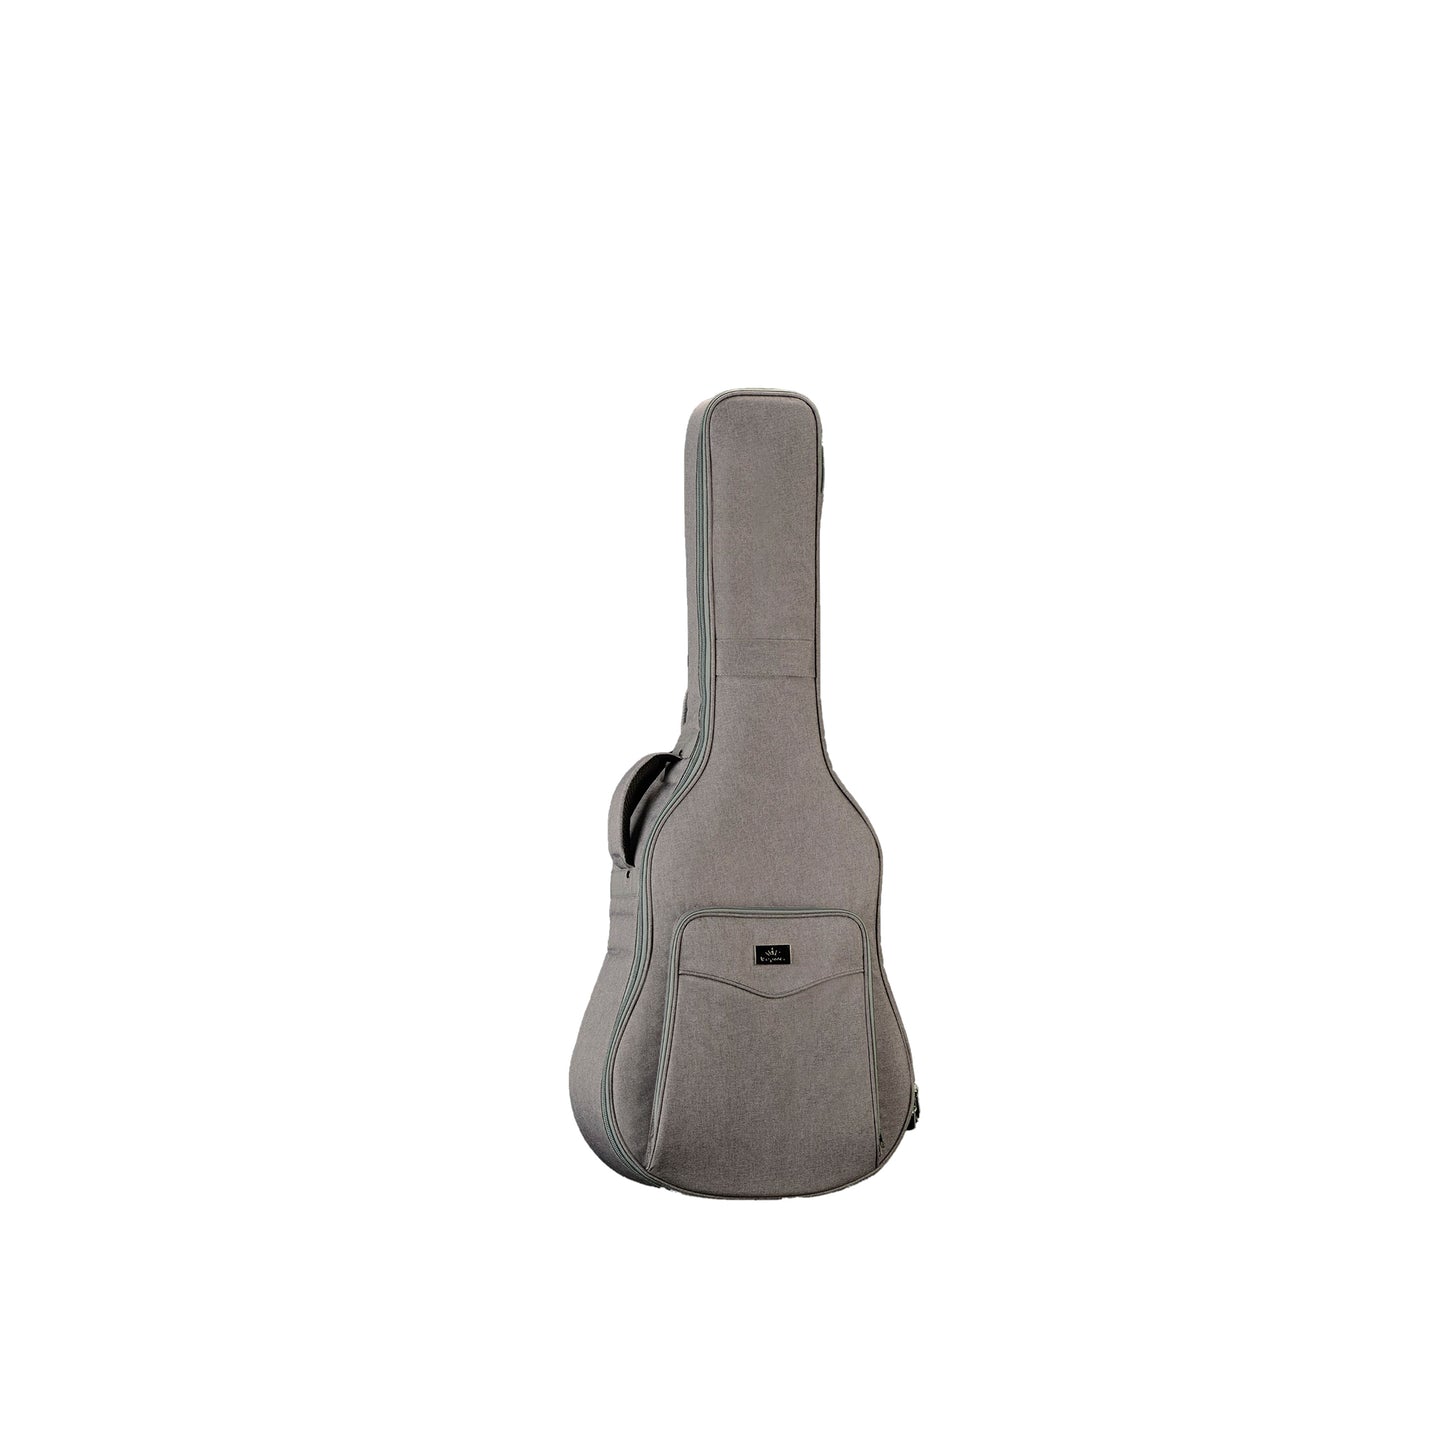 Kepma Premium Padded Guitar Bag Travel Size (36") - Grey